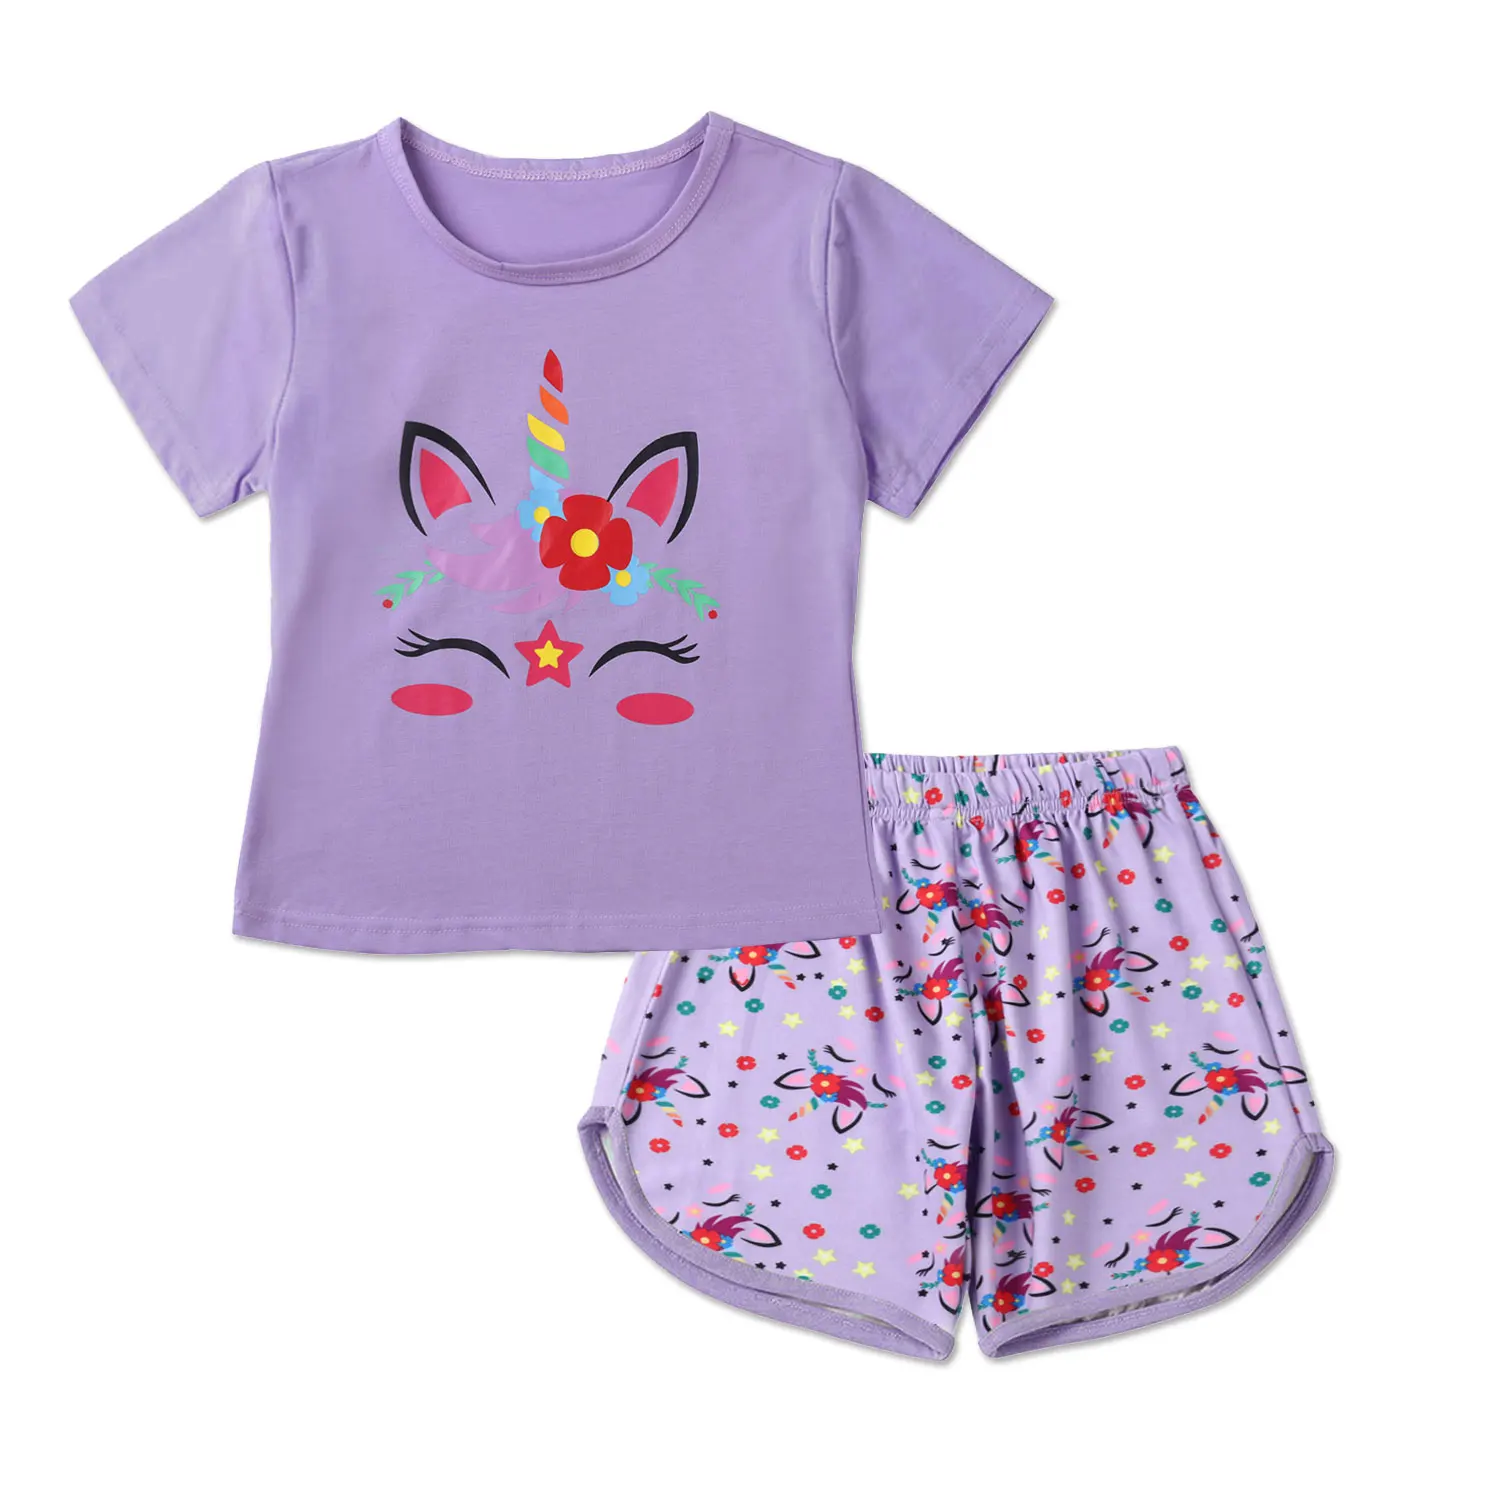 New Sleepwear Unicorn Cotton Pajamas for Girls Short Pants+Tops Suits Summer Home Clothing Kids Sleep Costume